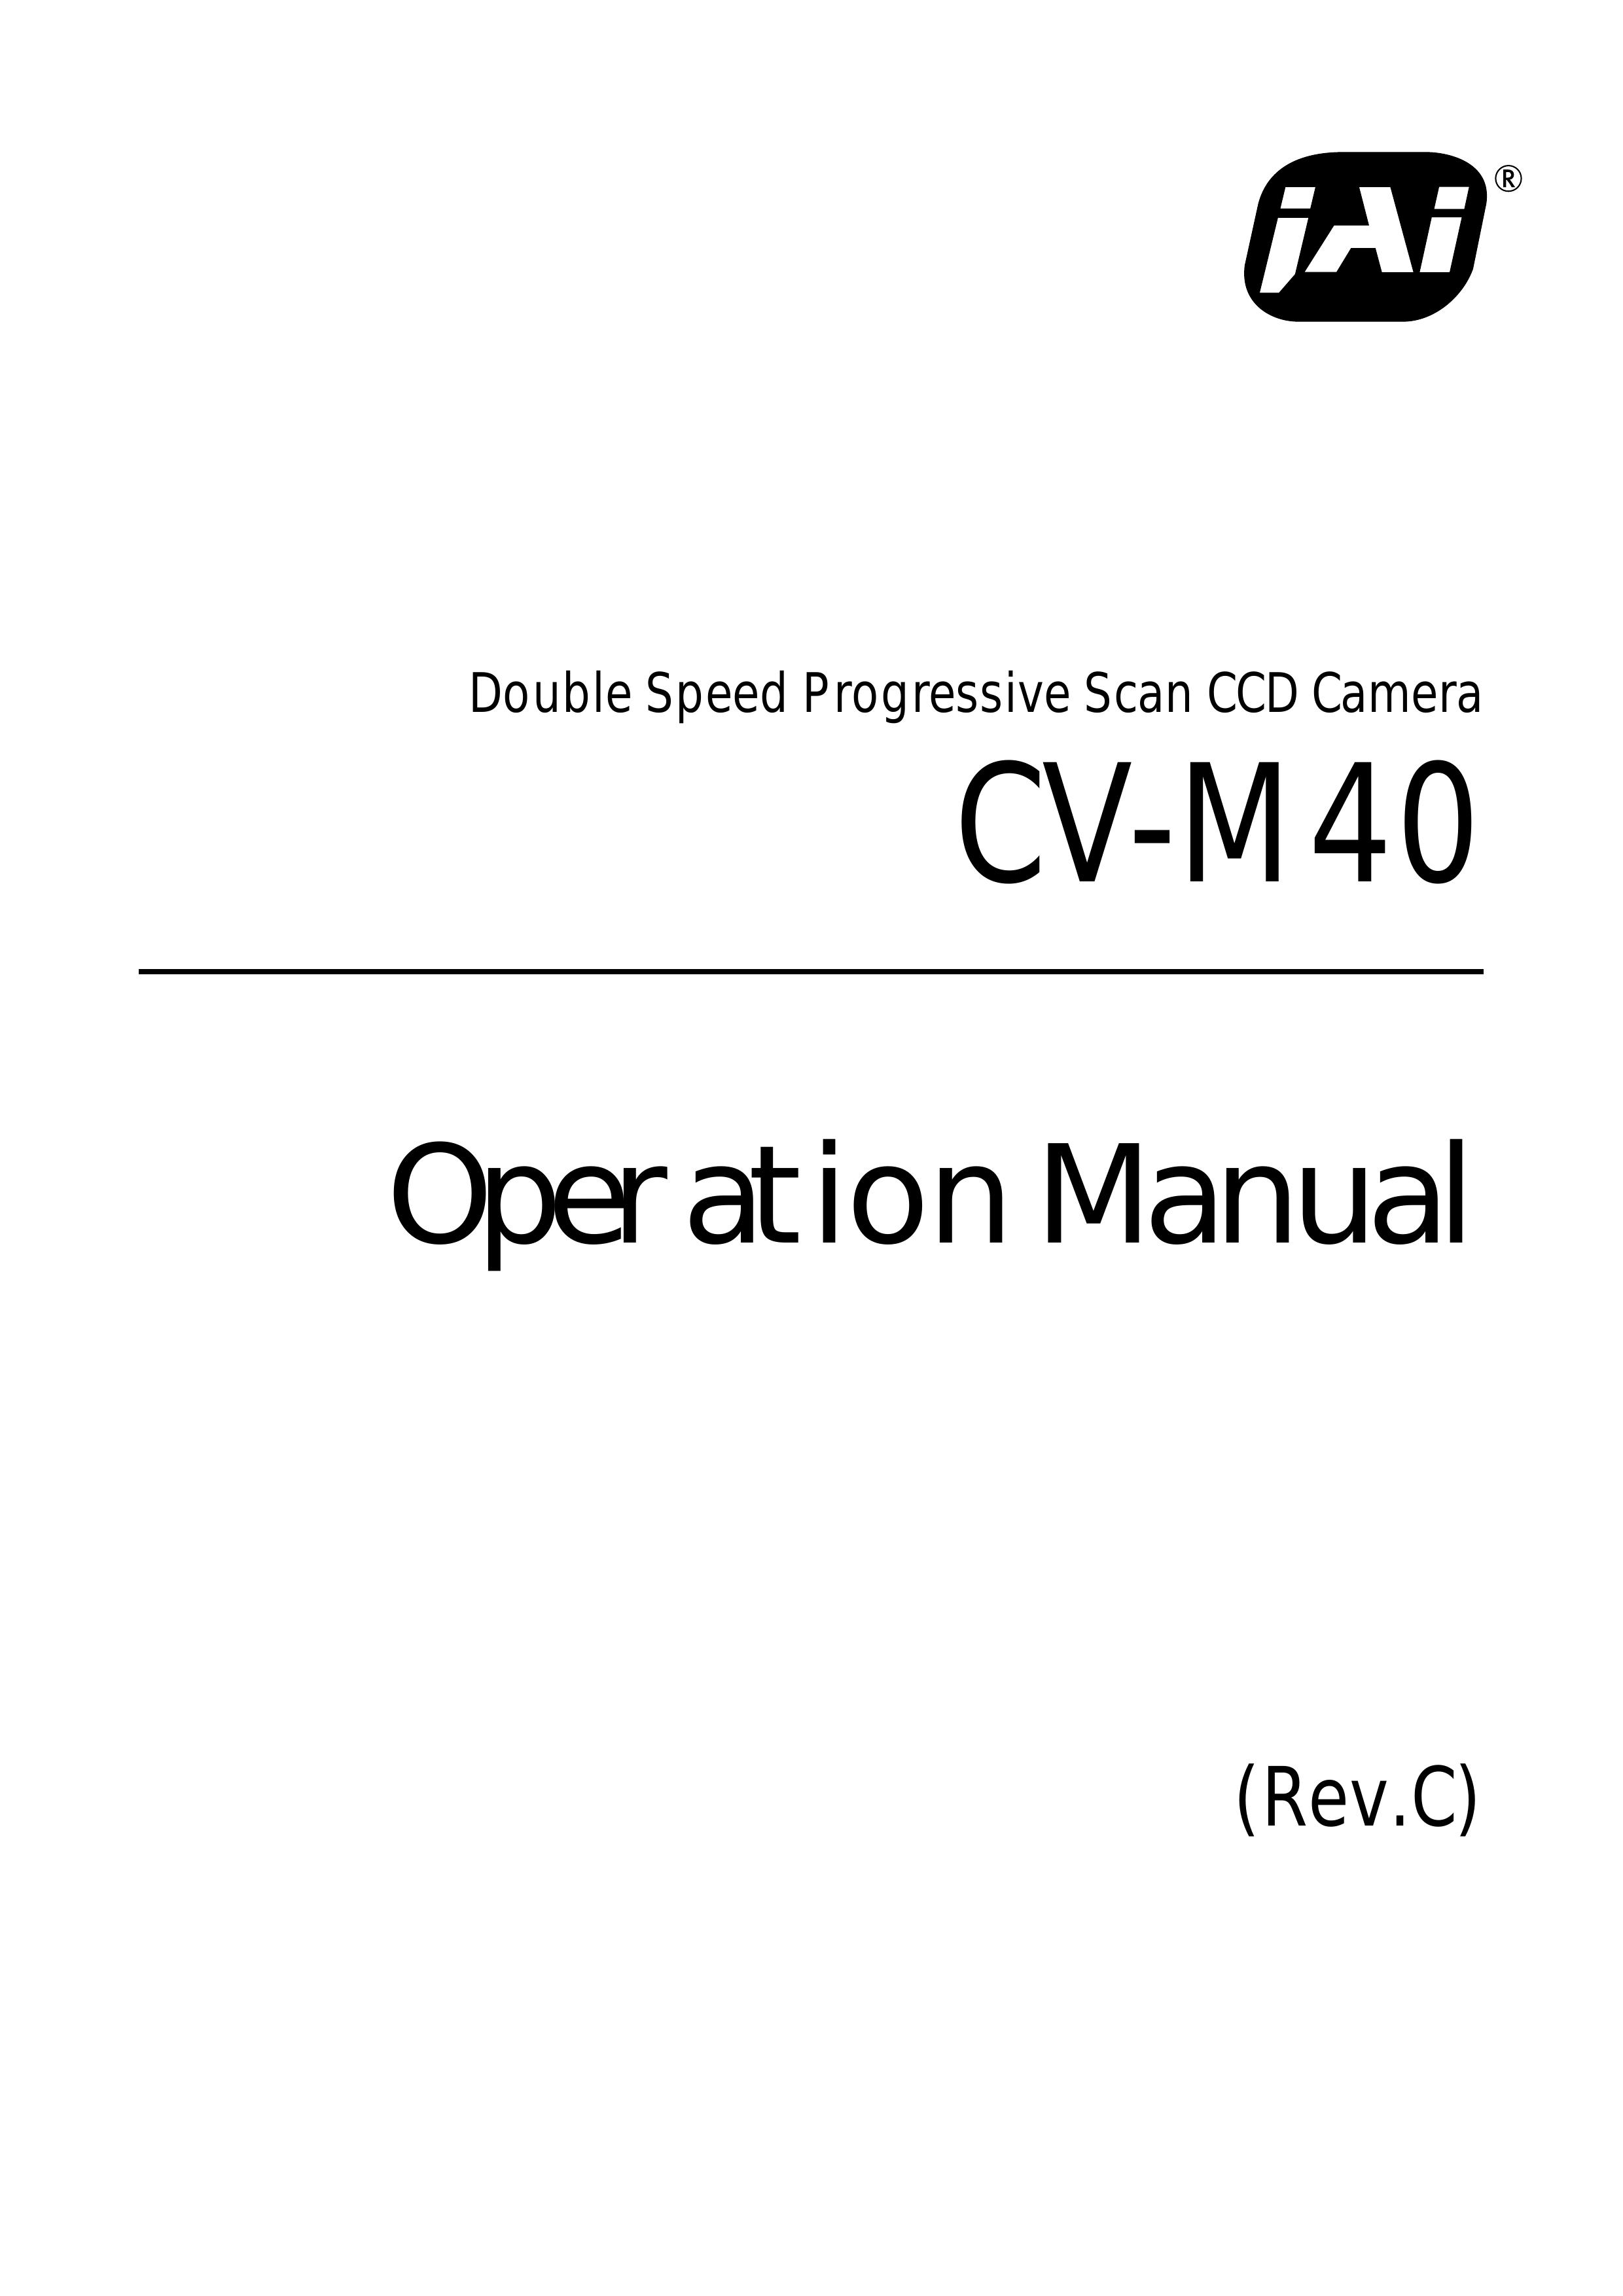 JAI CV-M40 Security Camera User Manual